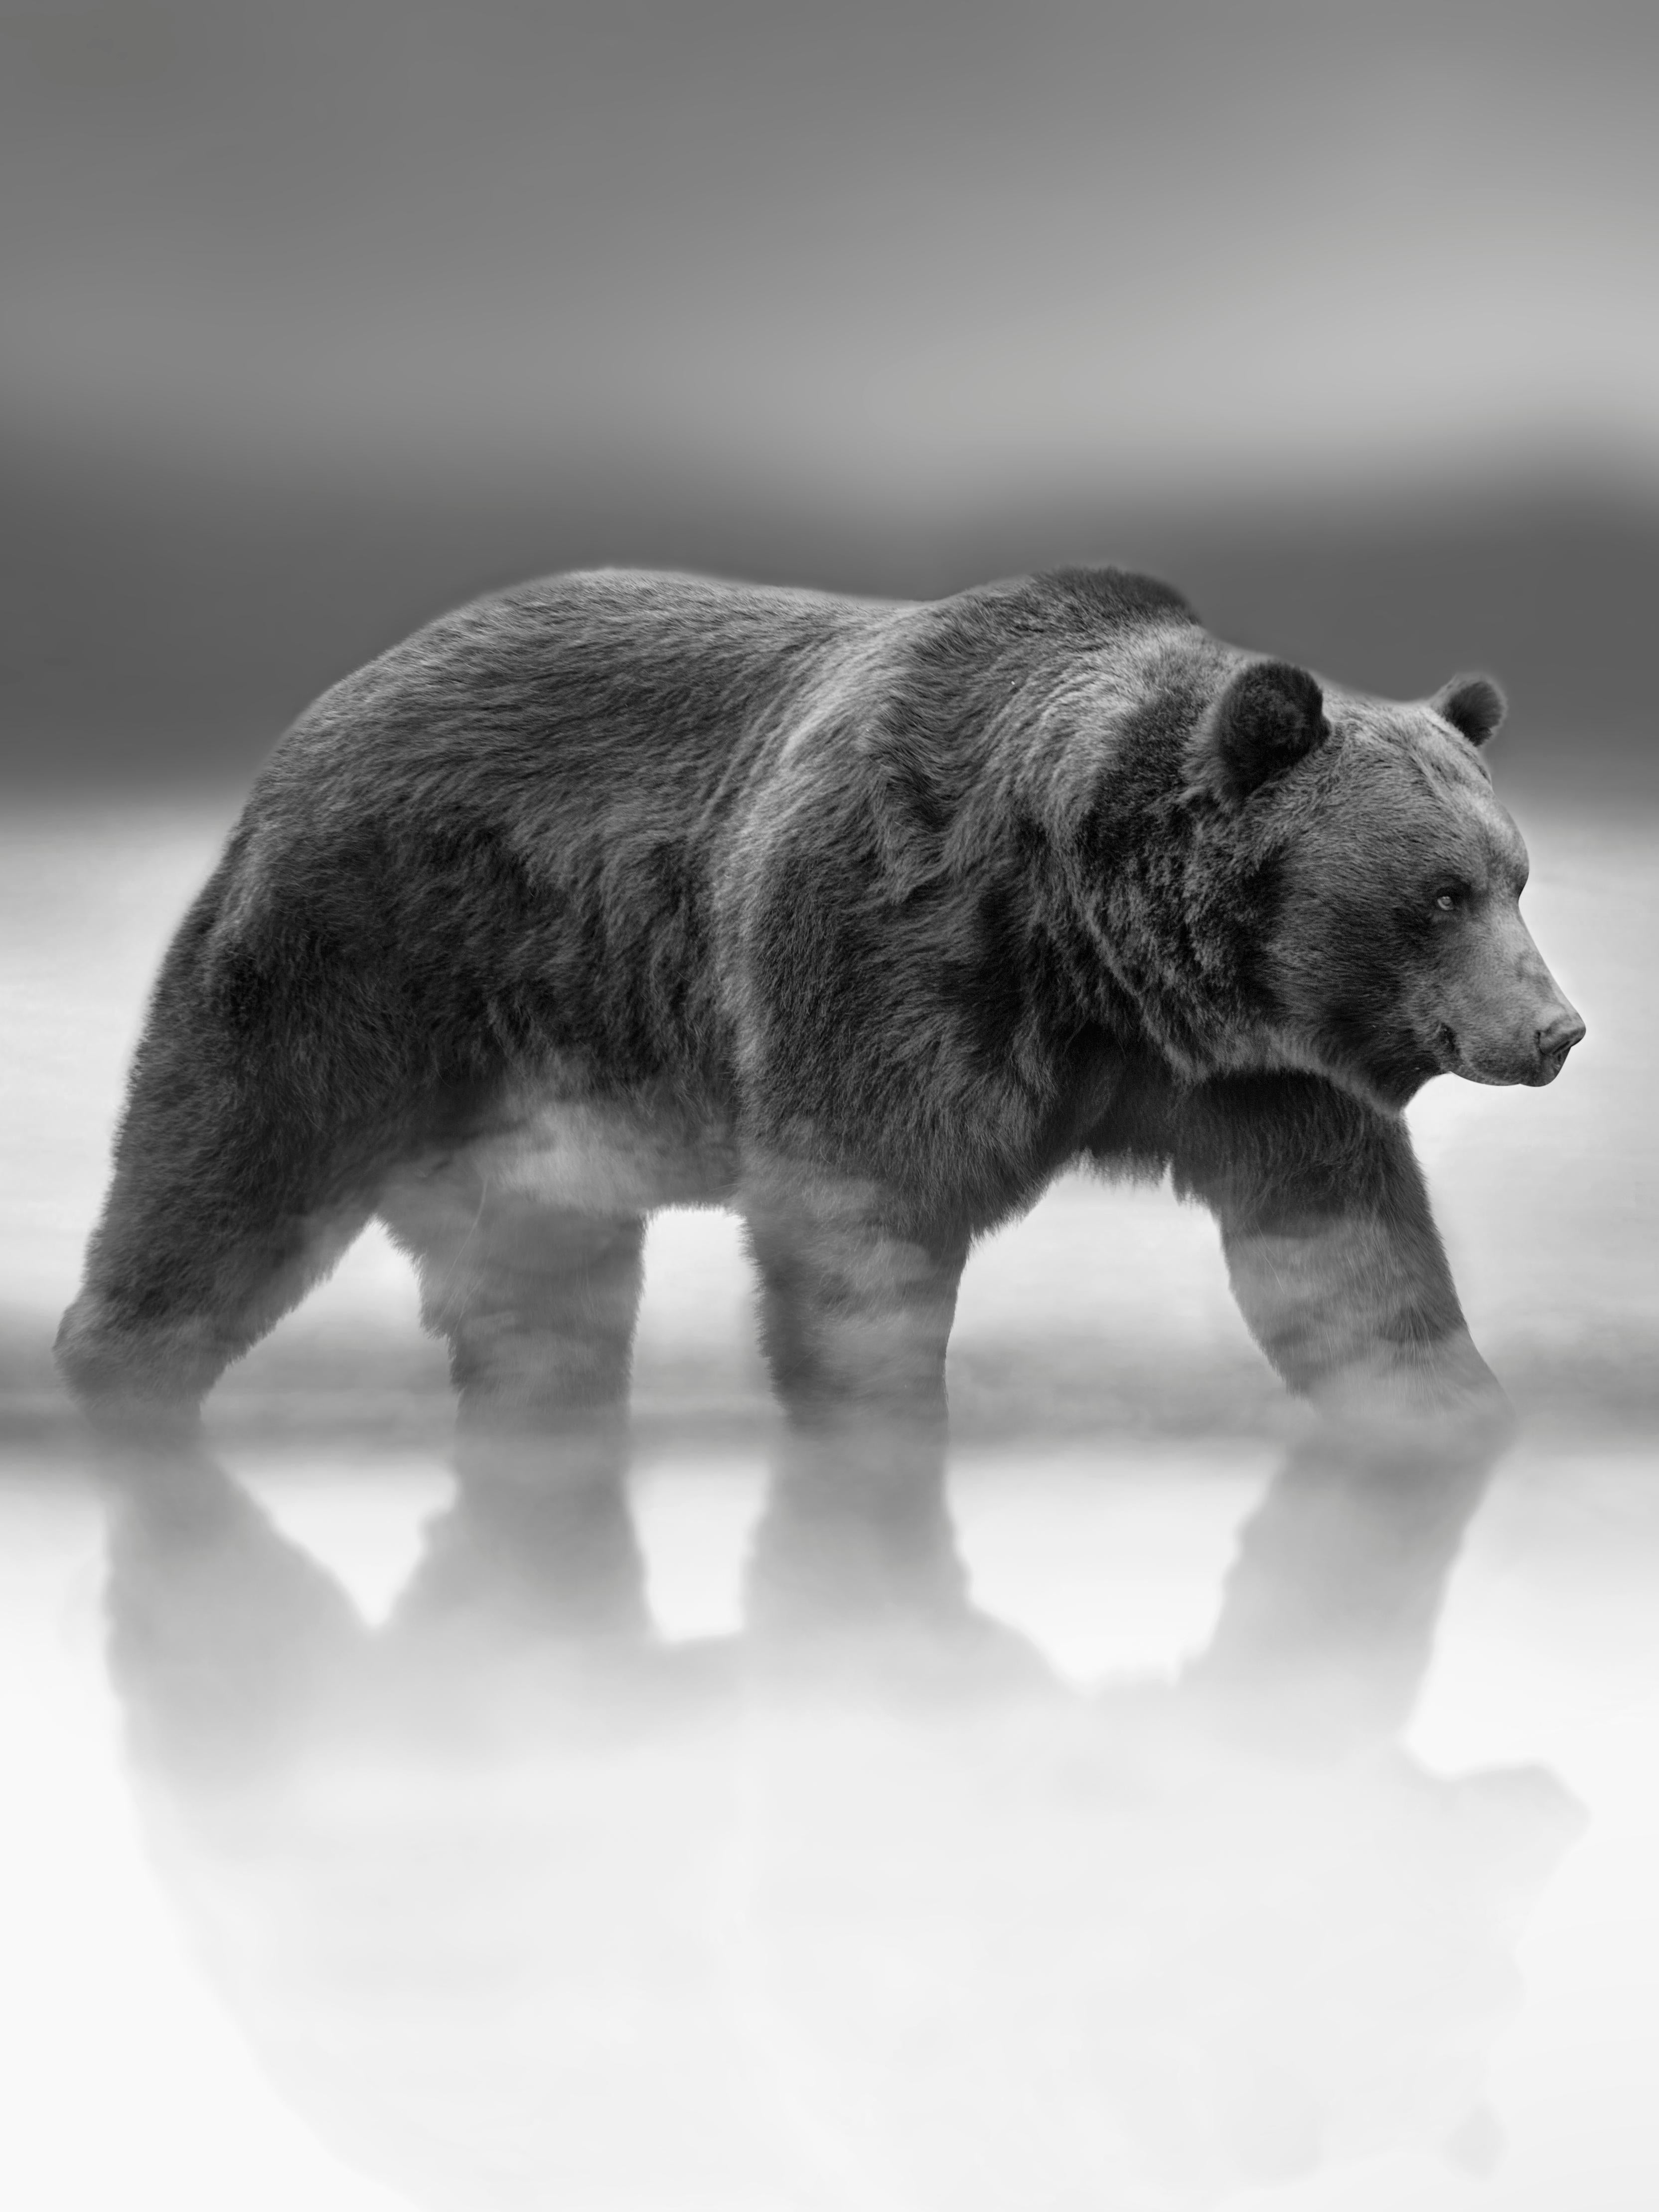 Shane Russeck Animal Print – Schwarz-Weiß-Fotografie, Bär-Fotografie, Kodiak Grizzly Bear Wildlife 60x50